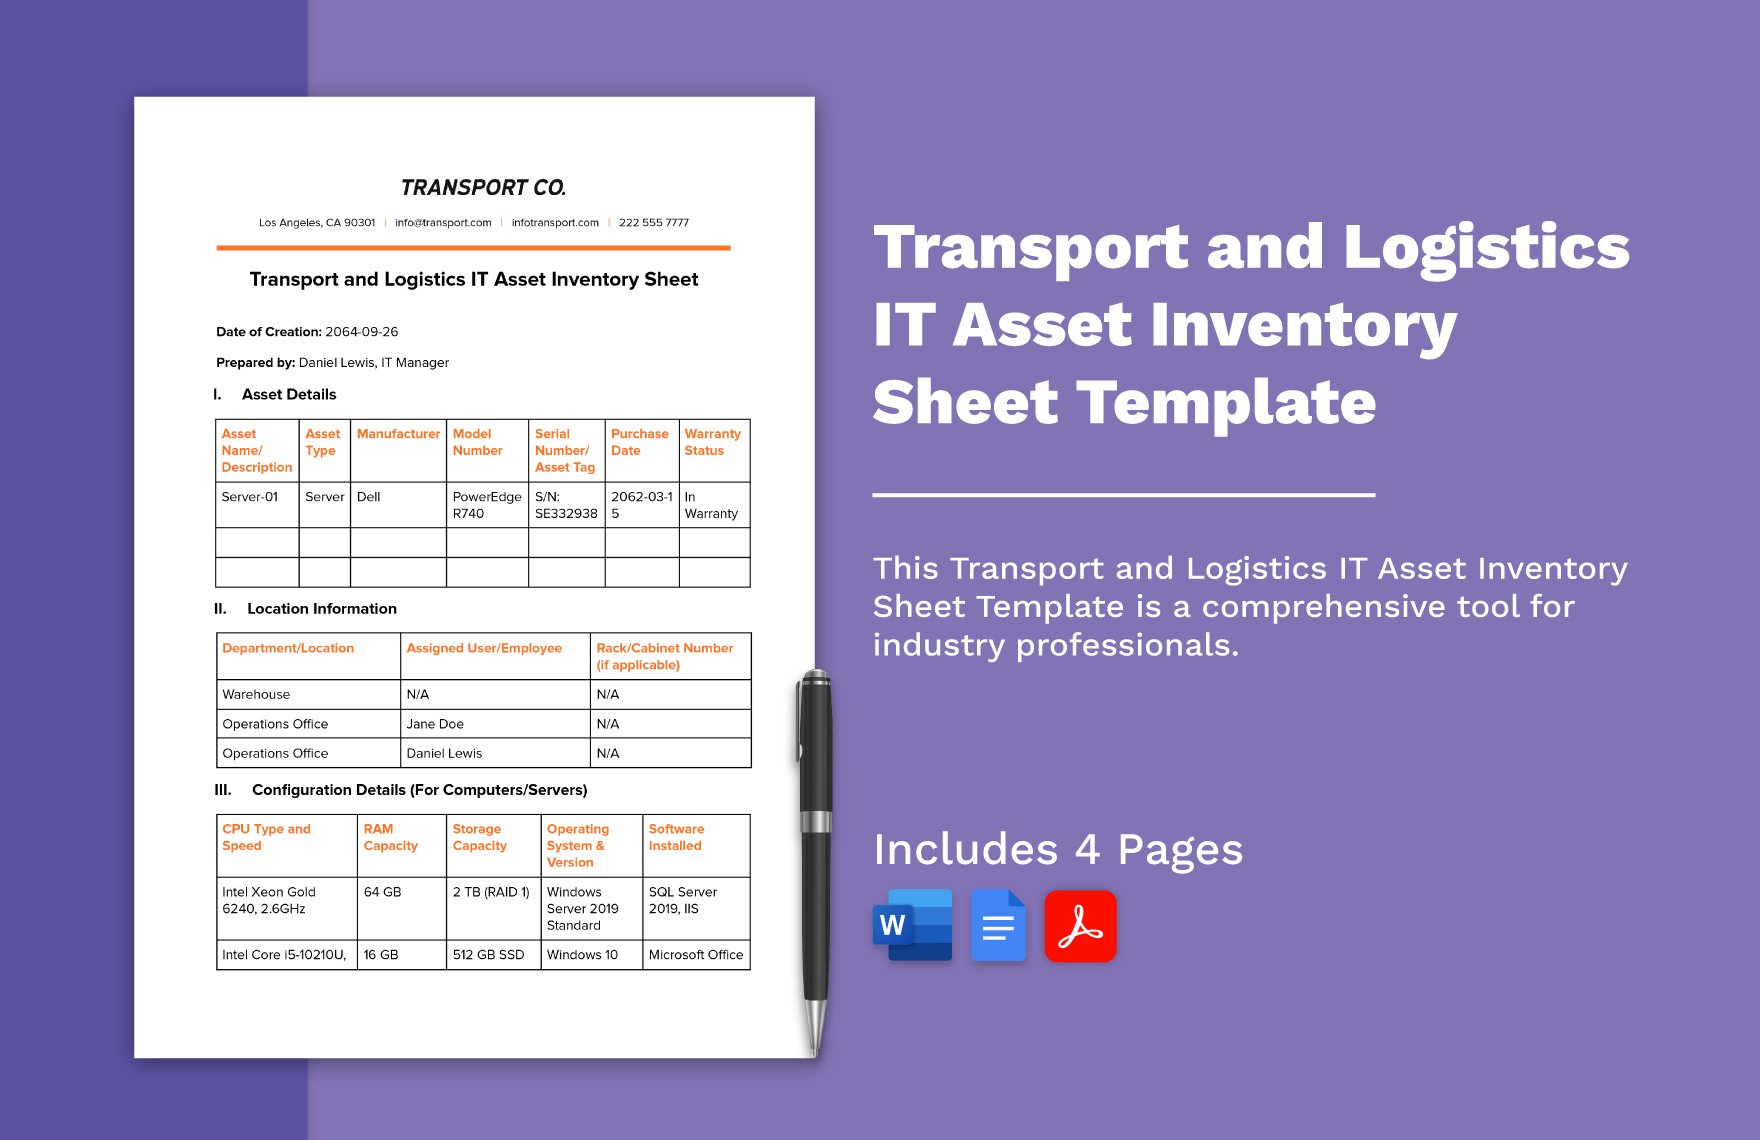 Transport and Logistics IT Asset Inventory Sheet Template